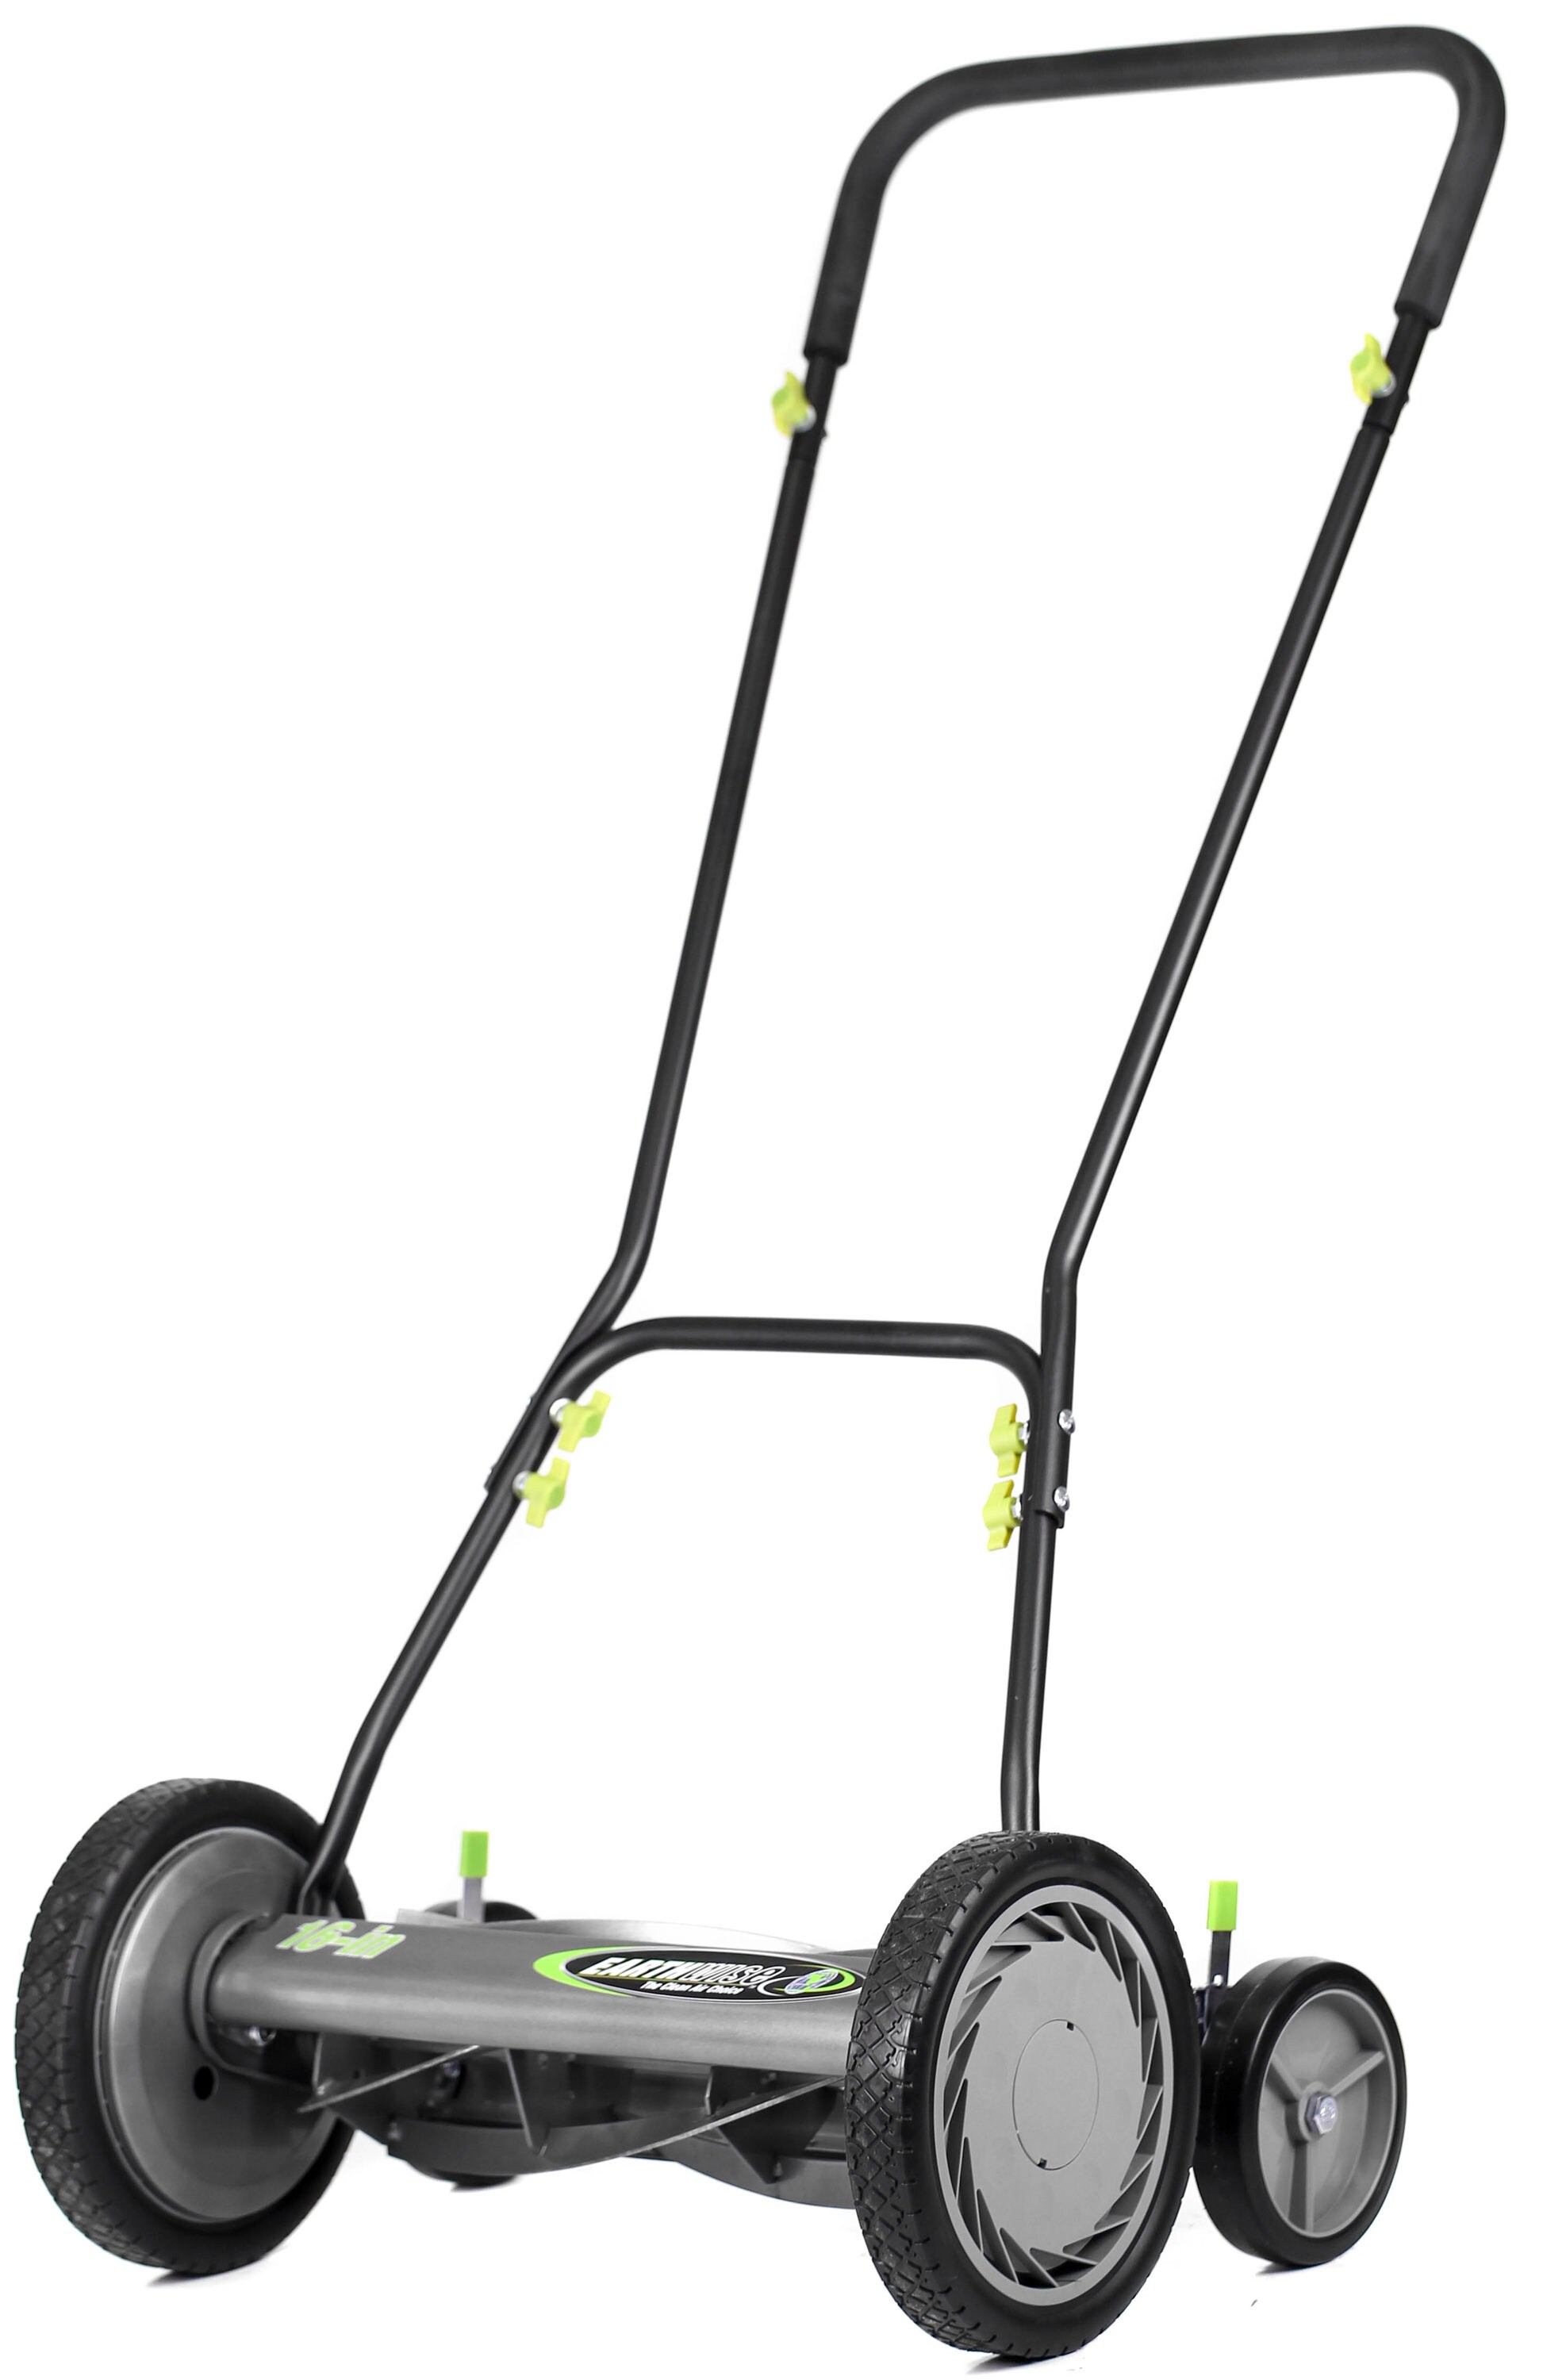 Earthwise 1715-16EW Walk-Behind Lawn Mower for sale online 